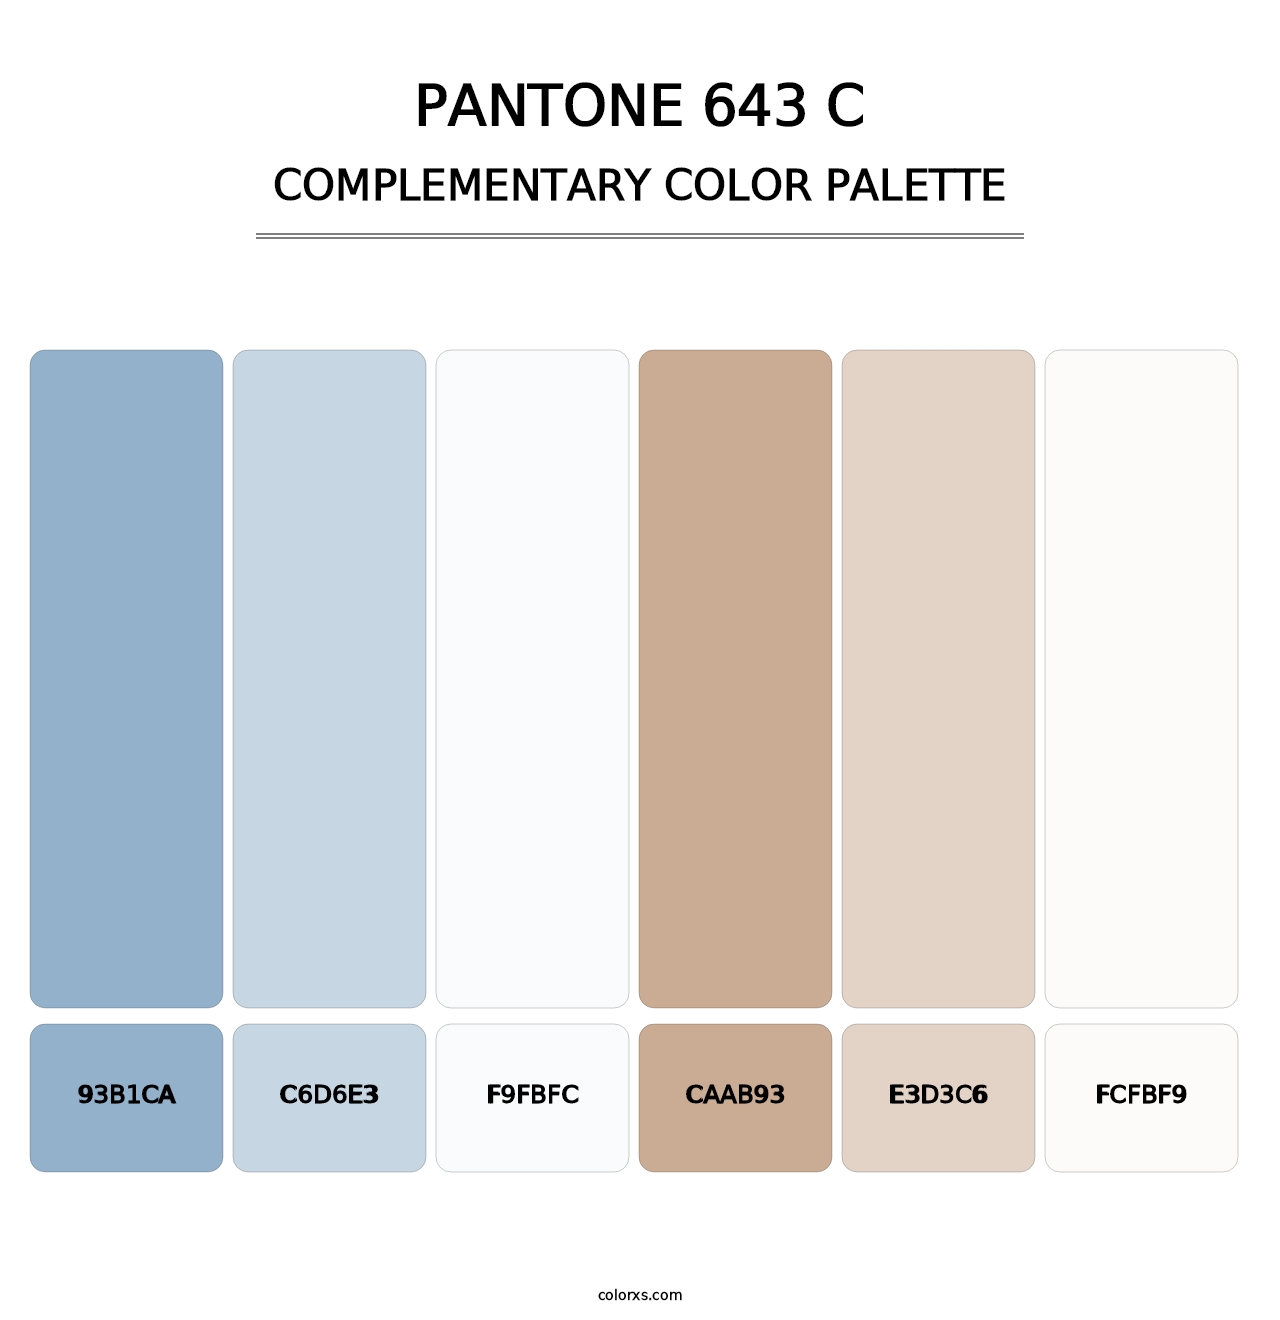 PANTONE 643 C - Complementary Color Palette